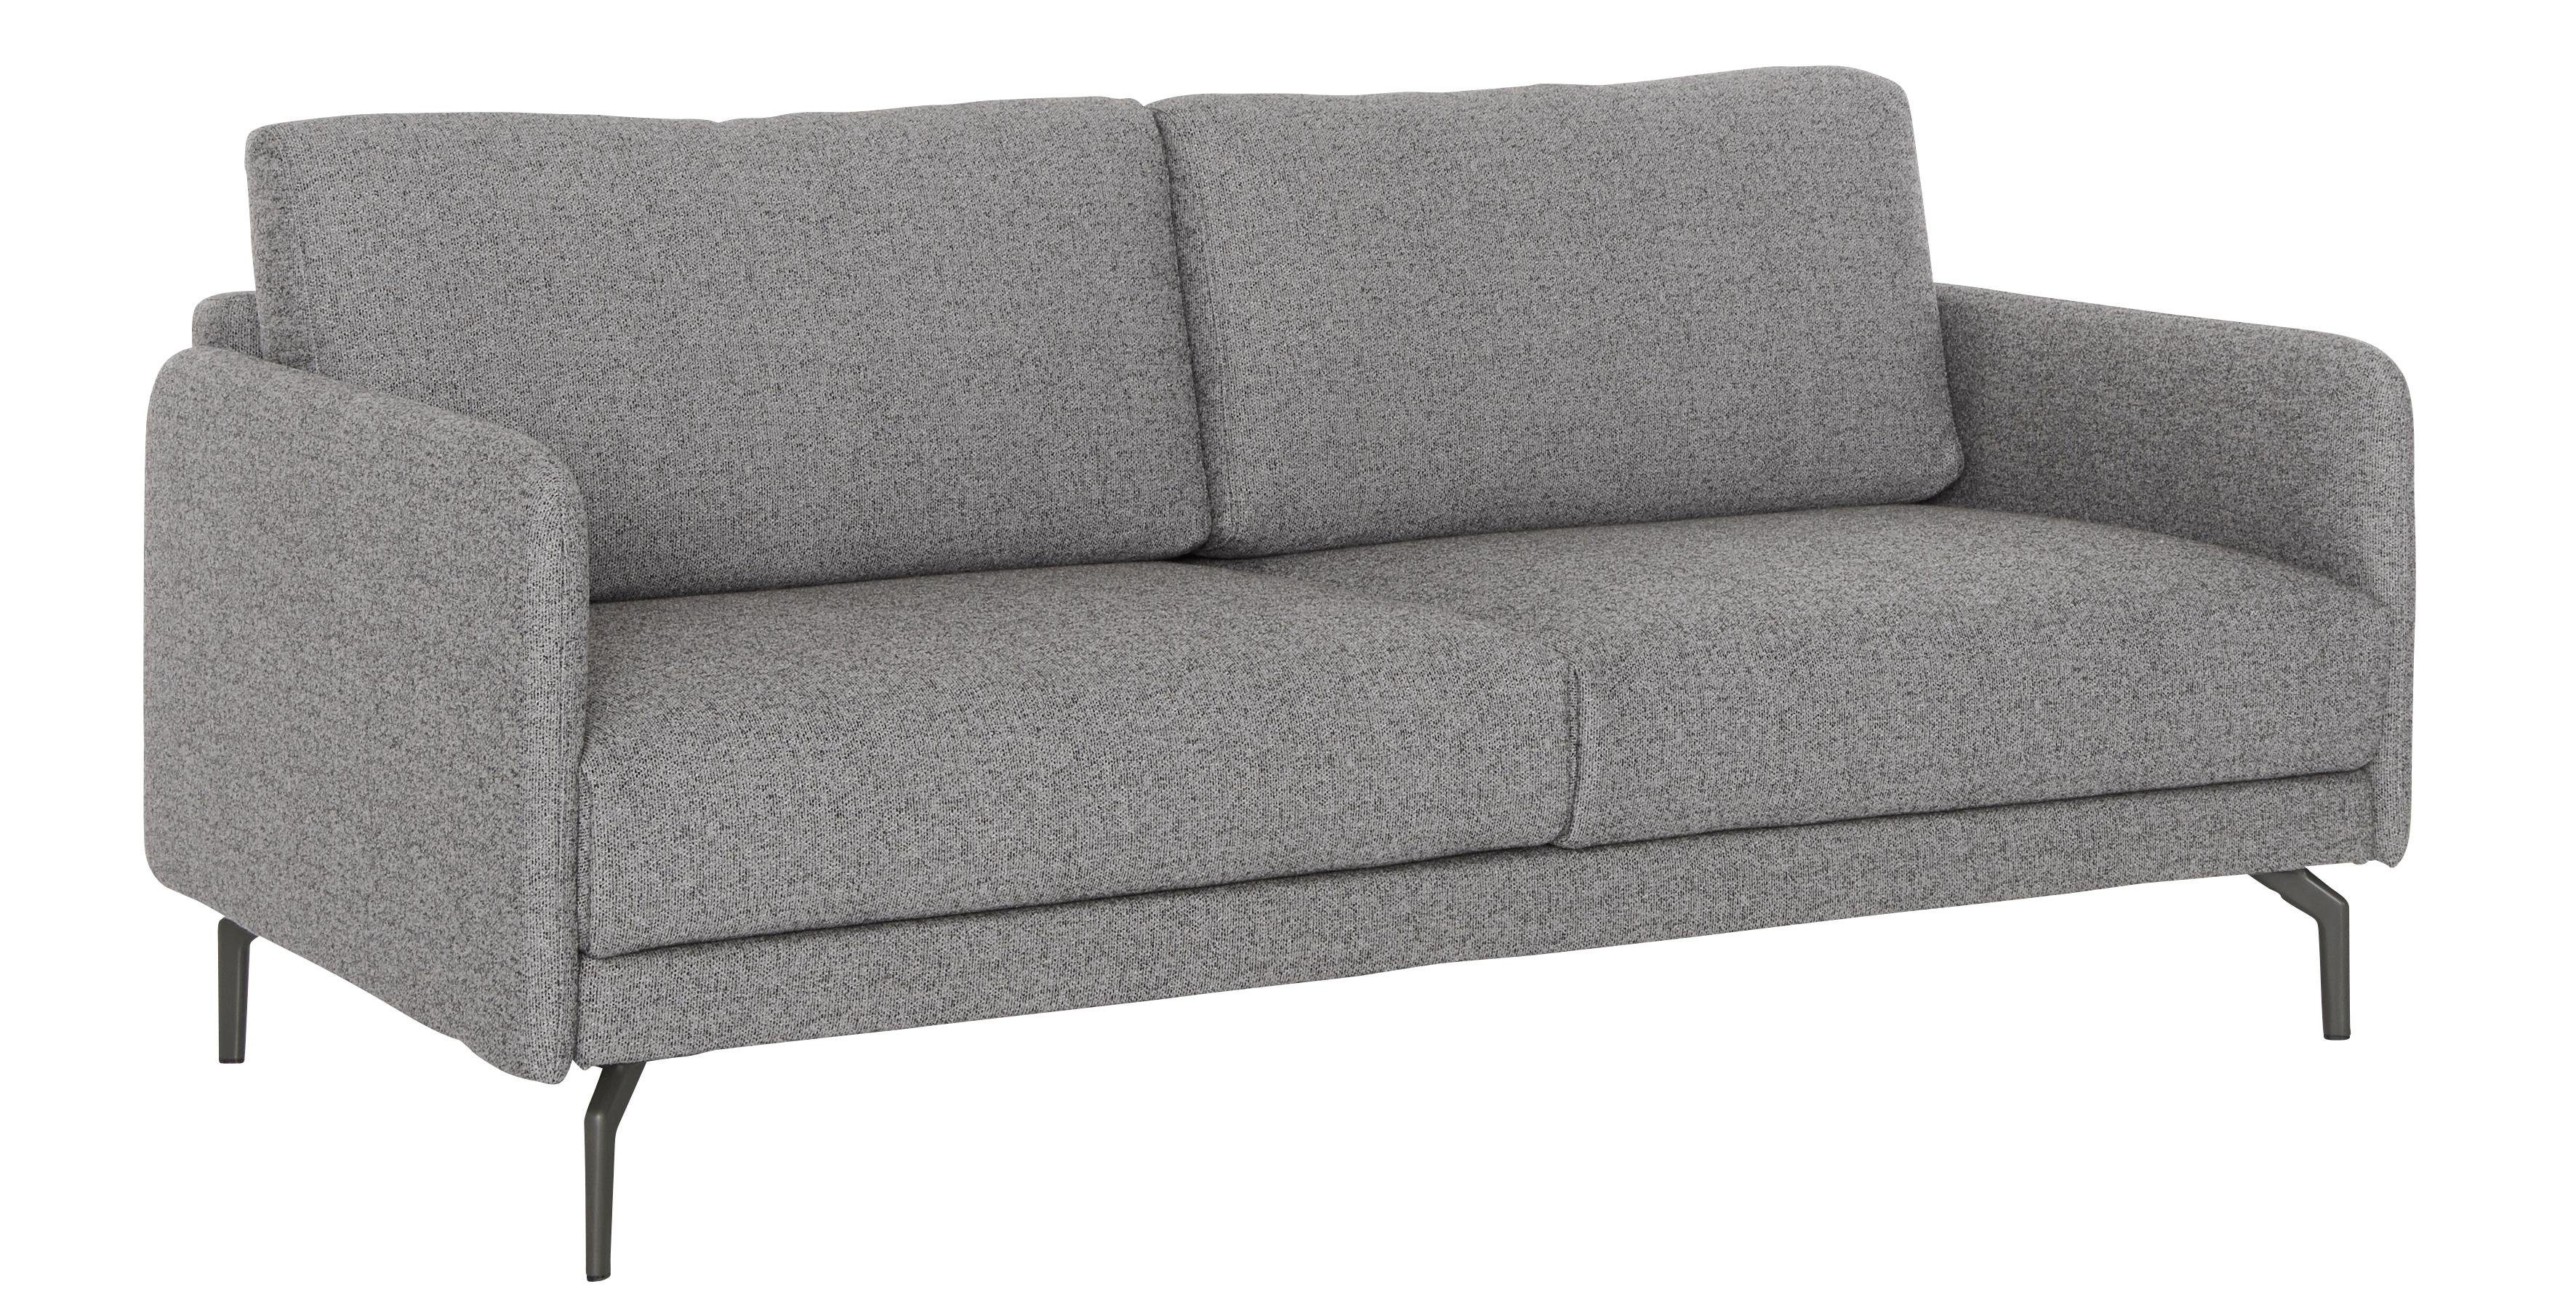 hülsta sofa 2-Sitzer hs.450, Armlehne sehr schmal, Alugussfüße in umbragrau, Breite 150 cm